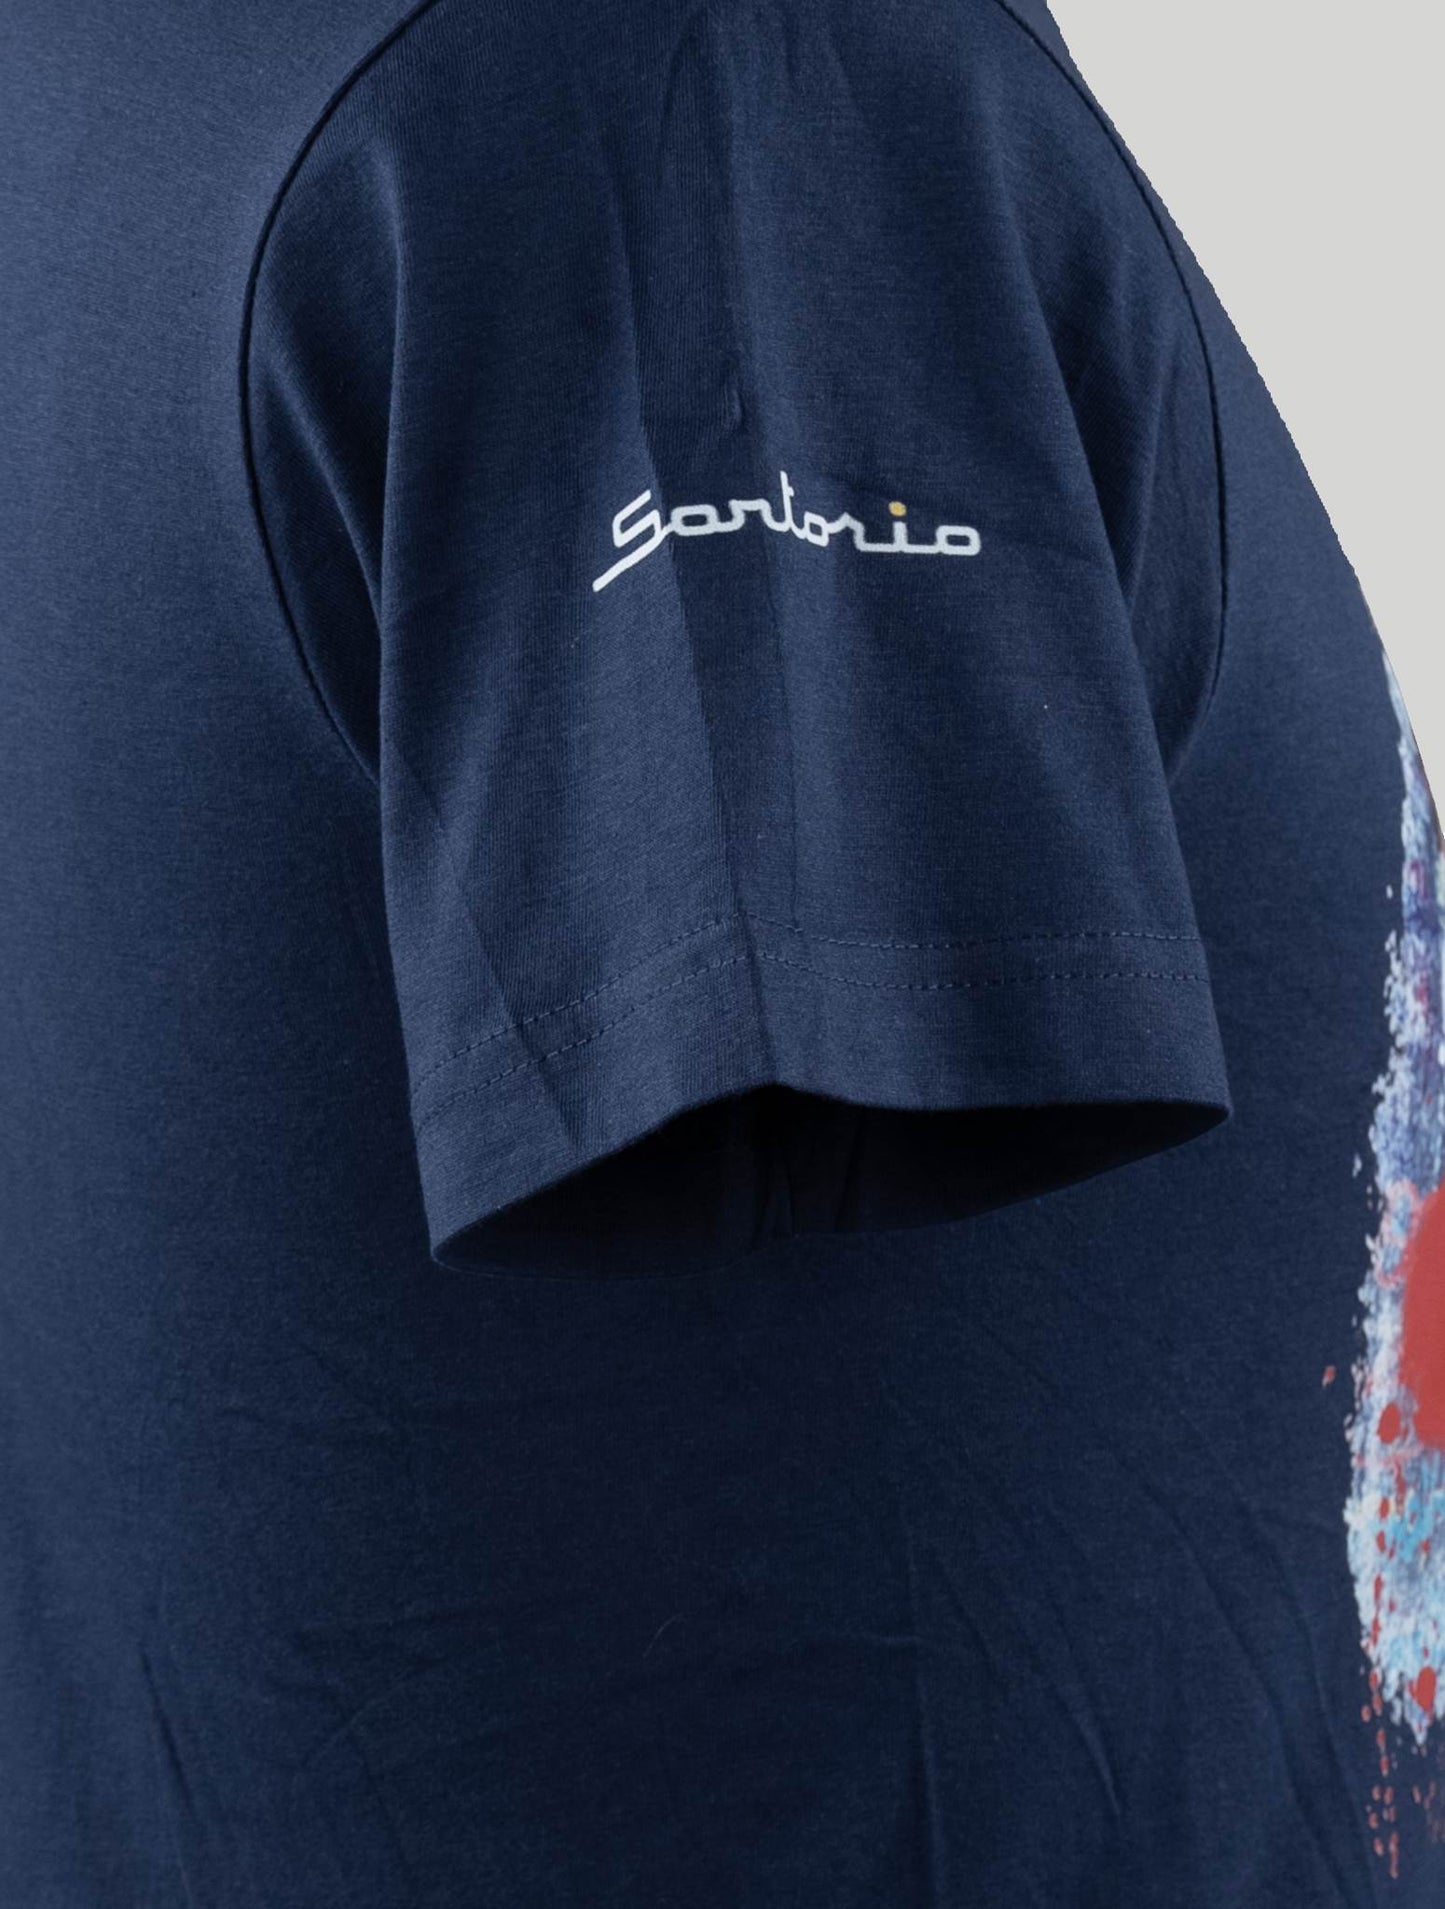 Sartorio Napoli Blå Cotton Sweater Specialudgave